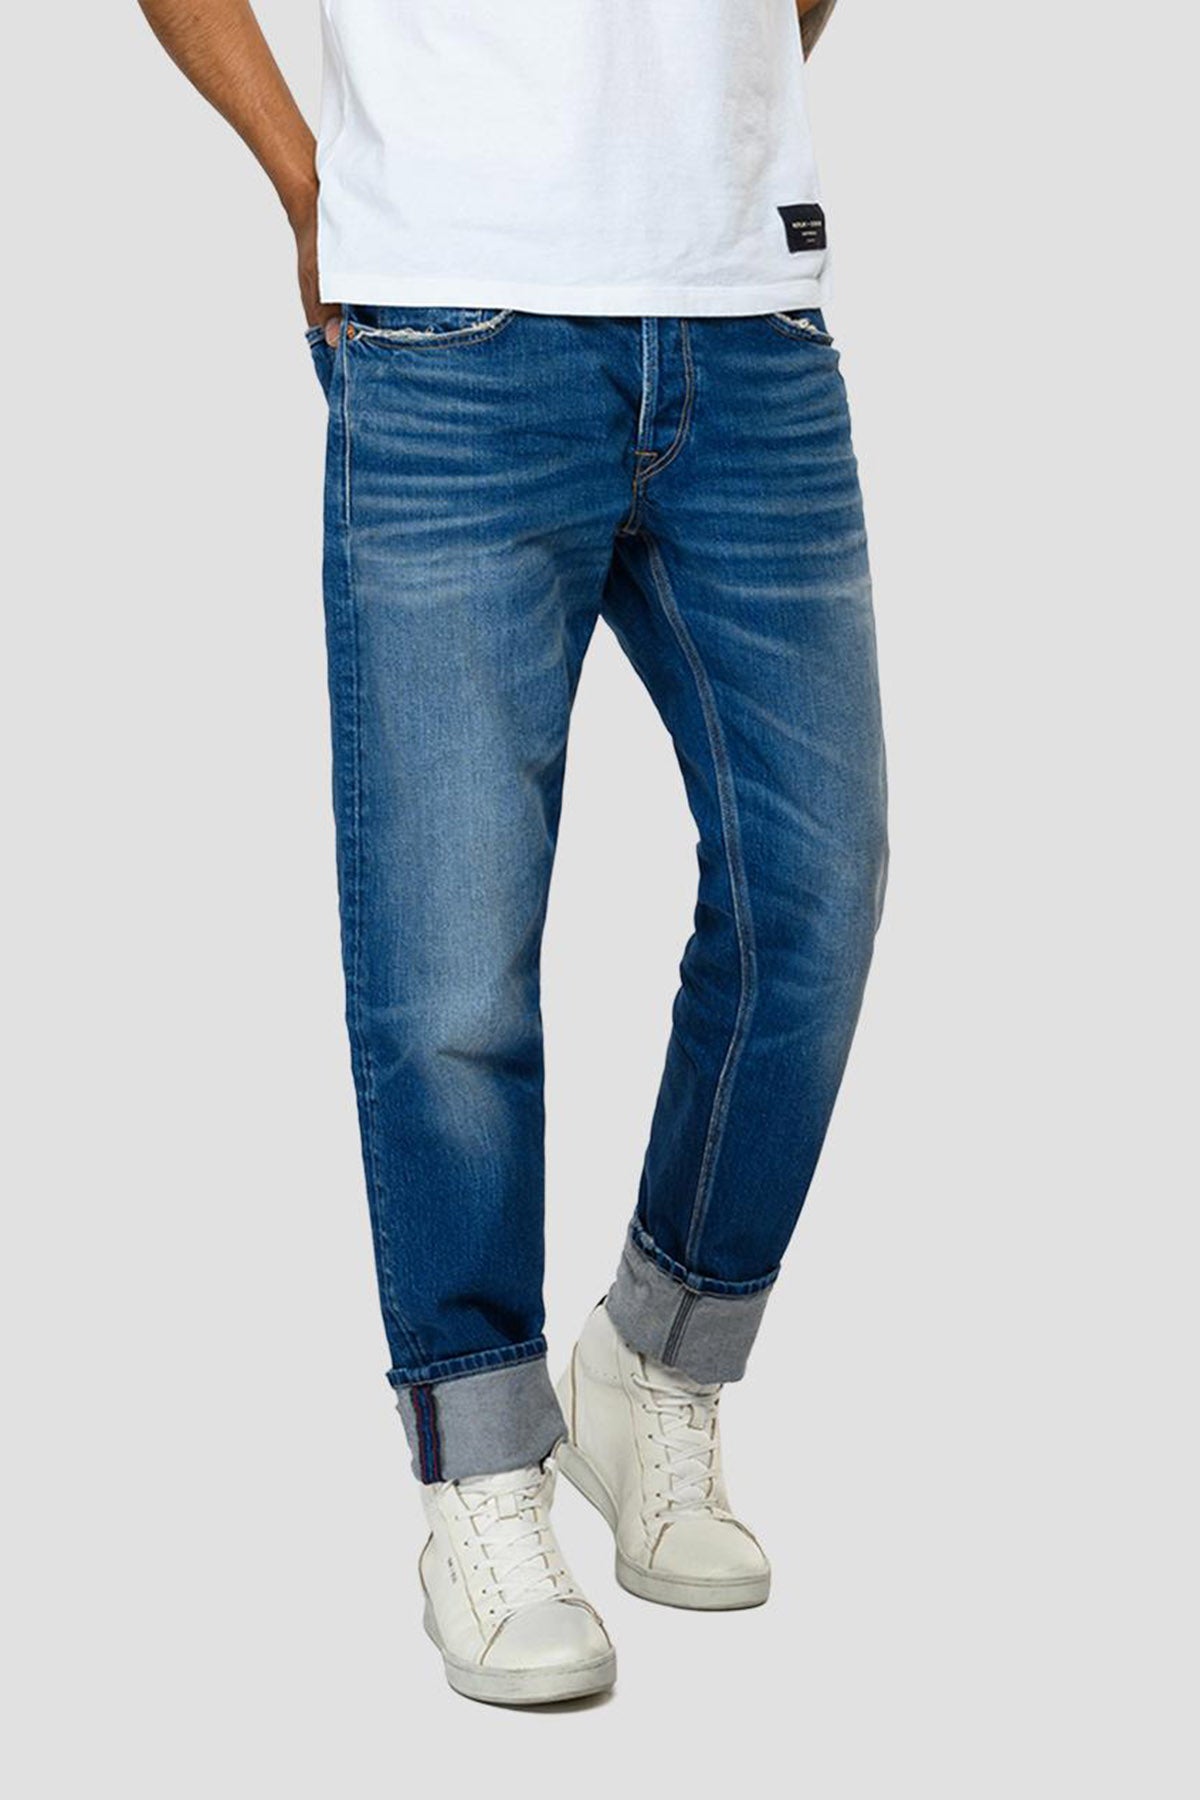 Replay Willbi Regular Slim Fit Jeans-Libas Trendy Fashion Store